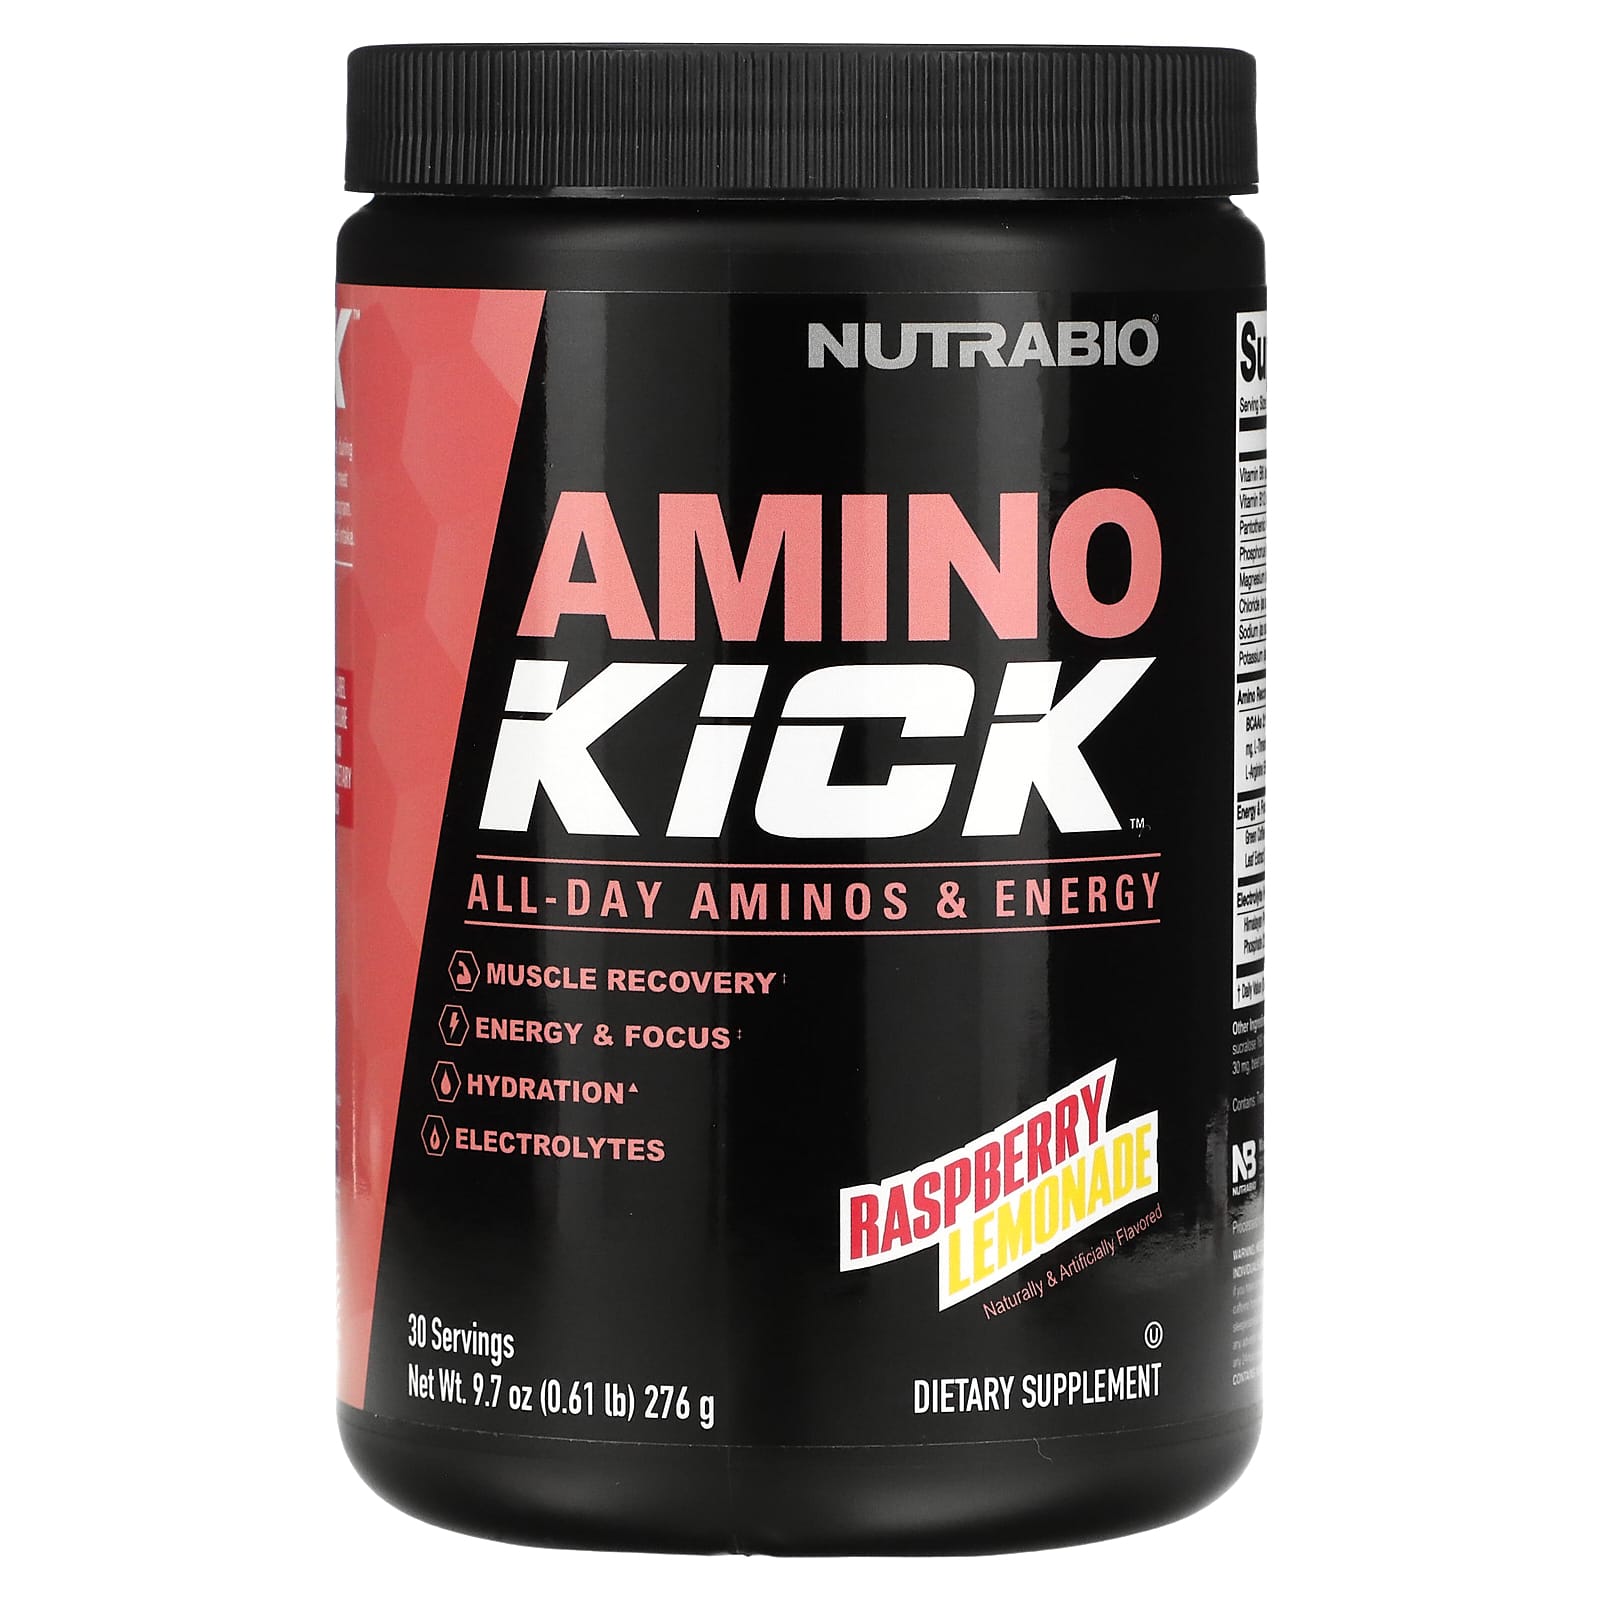 Пищевая Добавка Nutrabio Labs Amino Kick, малиновый лимонад, 276 г спортивная добавка nutrabio labs amino kick голубая малина 20 стиков по 9г